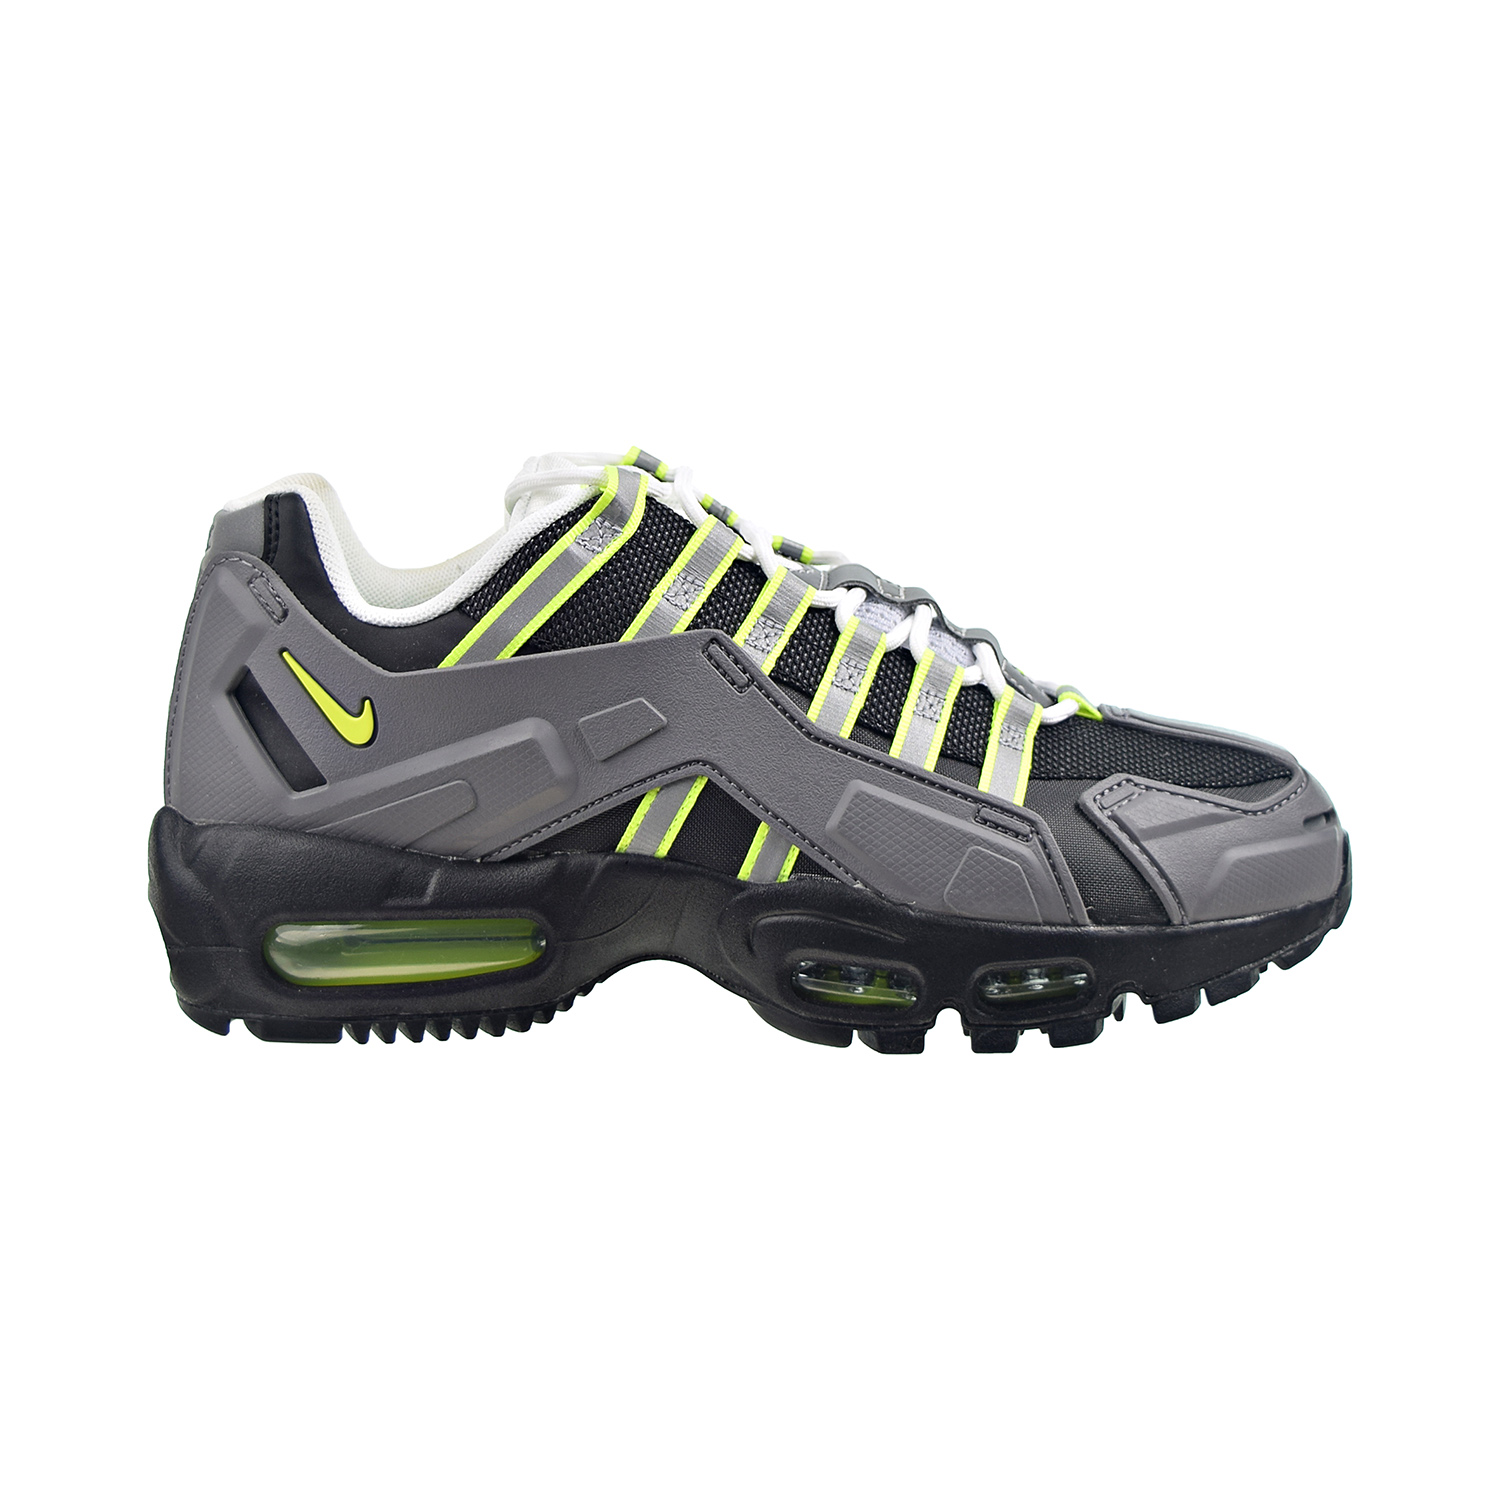 Nike Air Max 95 NDSTRKT AM 95 Men's Shoes Black-Neon Yellow-Medium Grey cz3591-002 - image 1 of 6